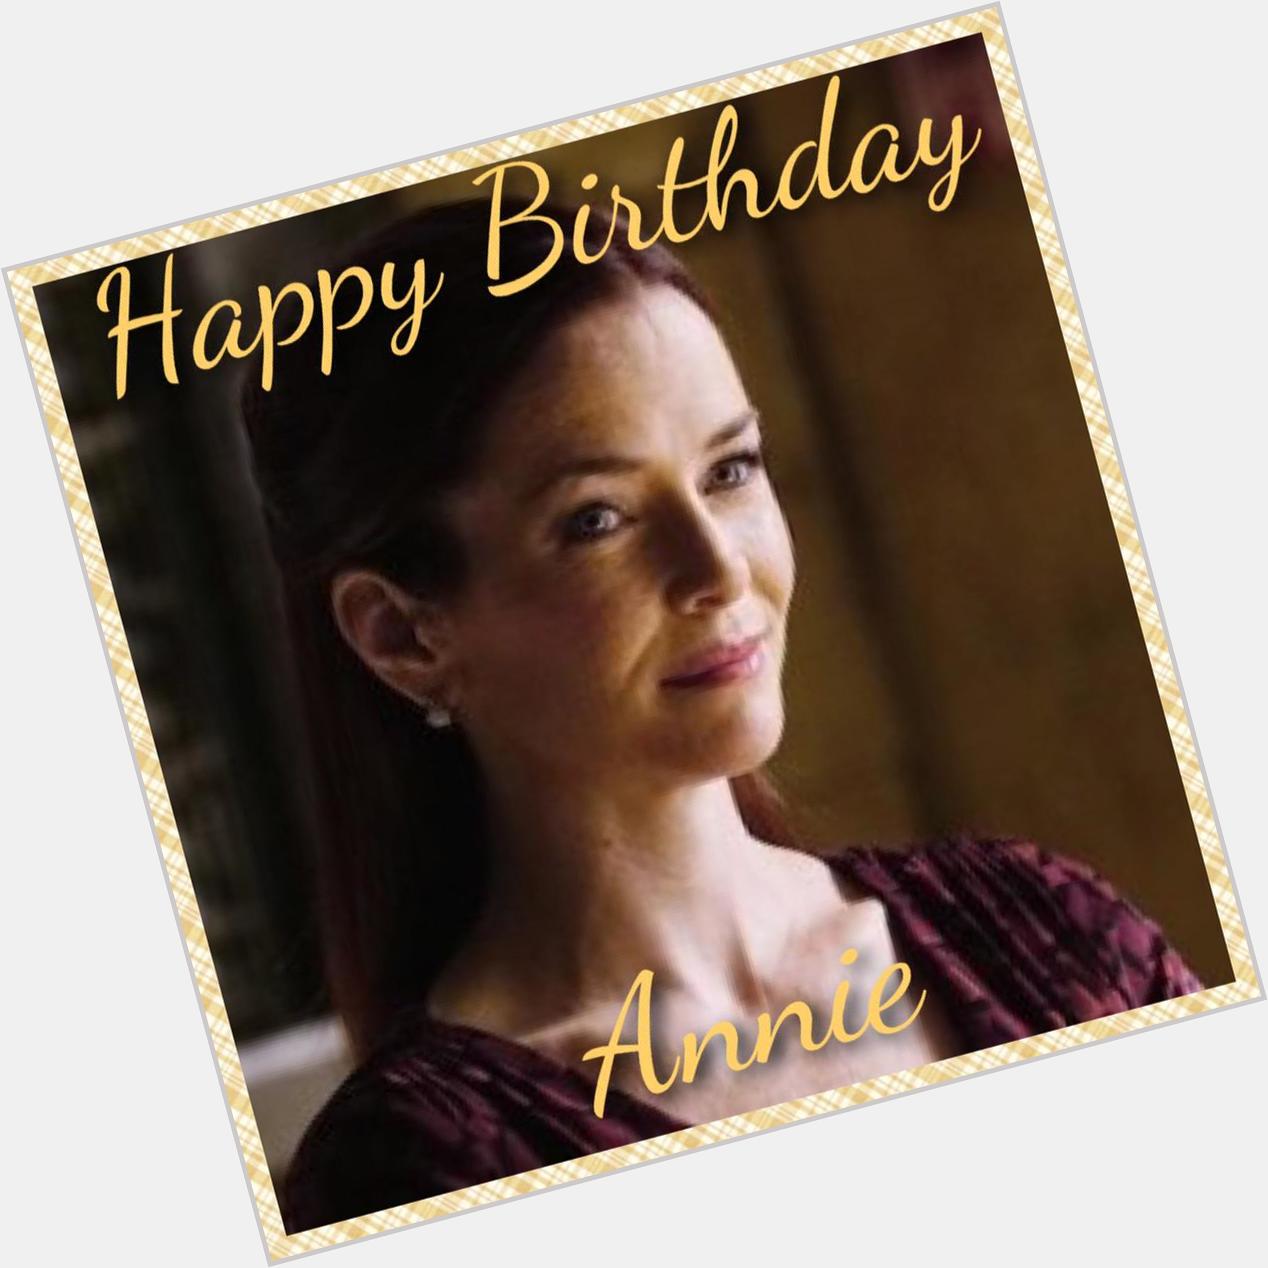  Happy birthday to the best tv psychopathic-surgeon, Dr Nieman - played by the amazing Annie Wersching    